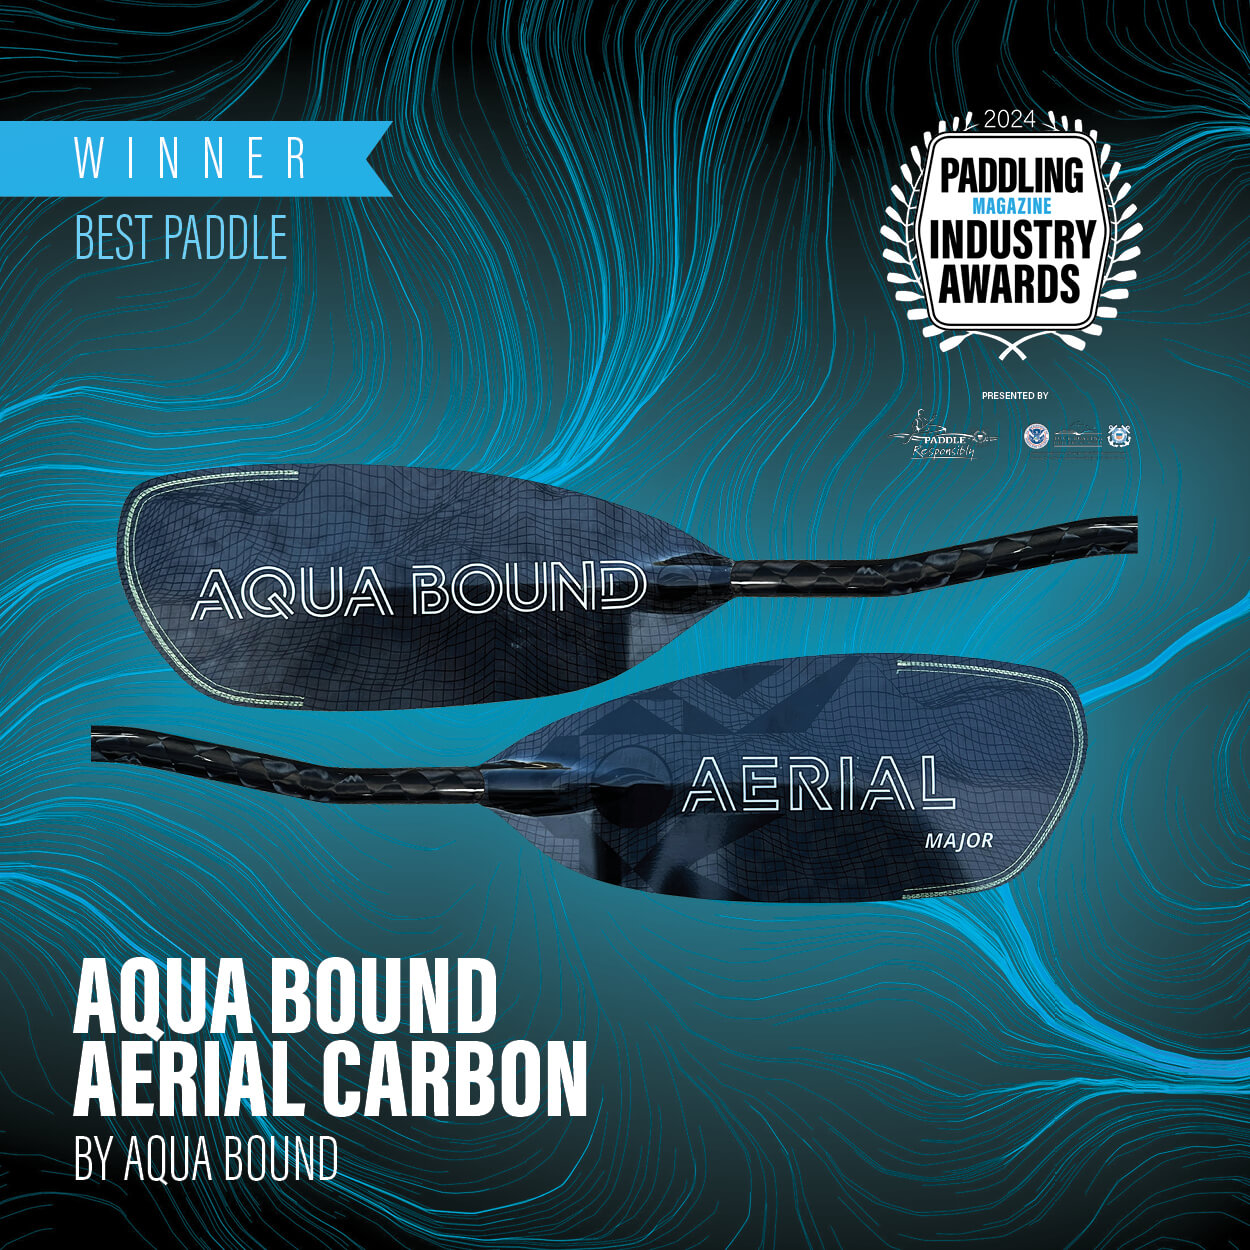 Aerial Minor Carbon 2-Piece Versa-Lok Crank Shaft Kayak Paddle